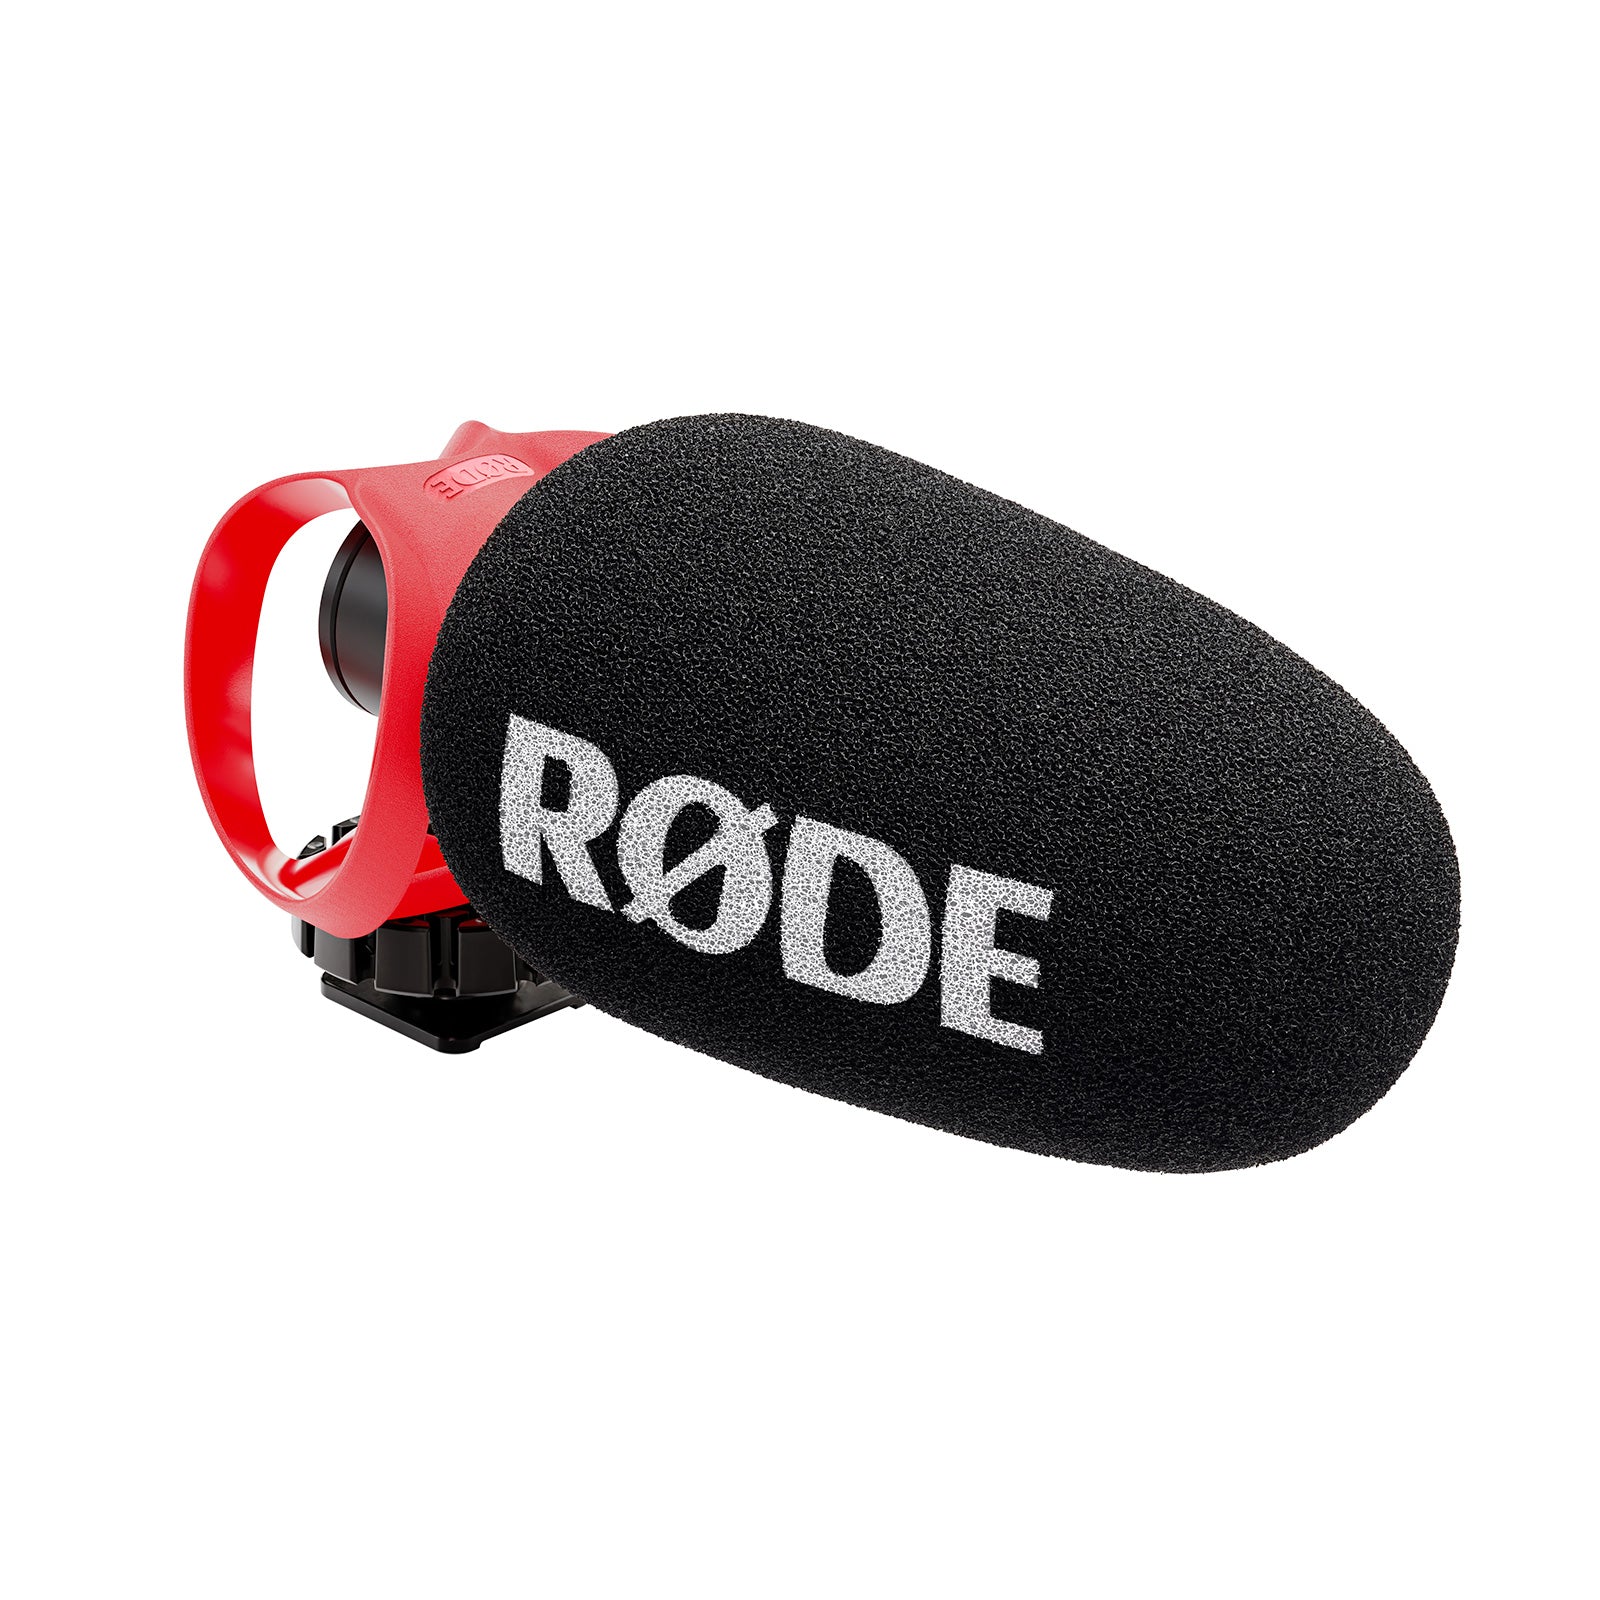 RODE(ロード) オンカメラショットガンマイク VideoMicro II (VMICROII)